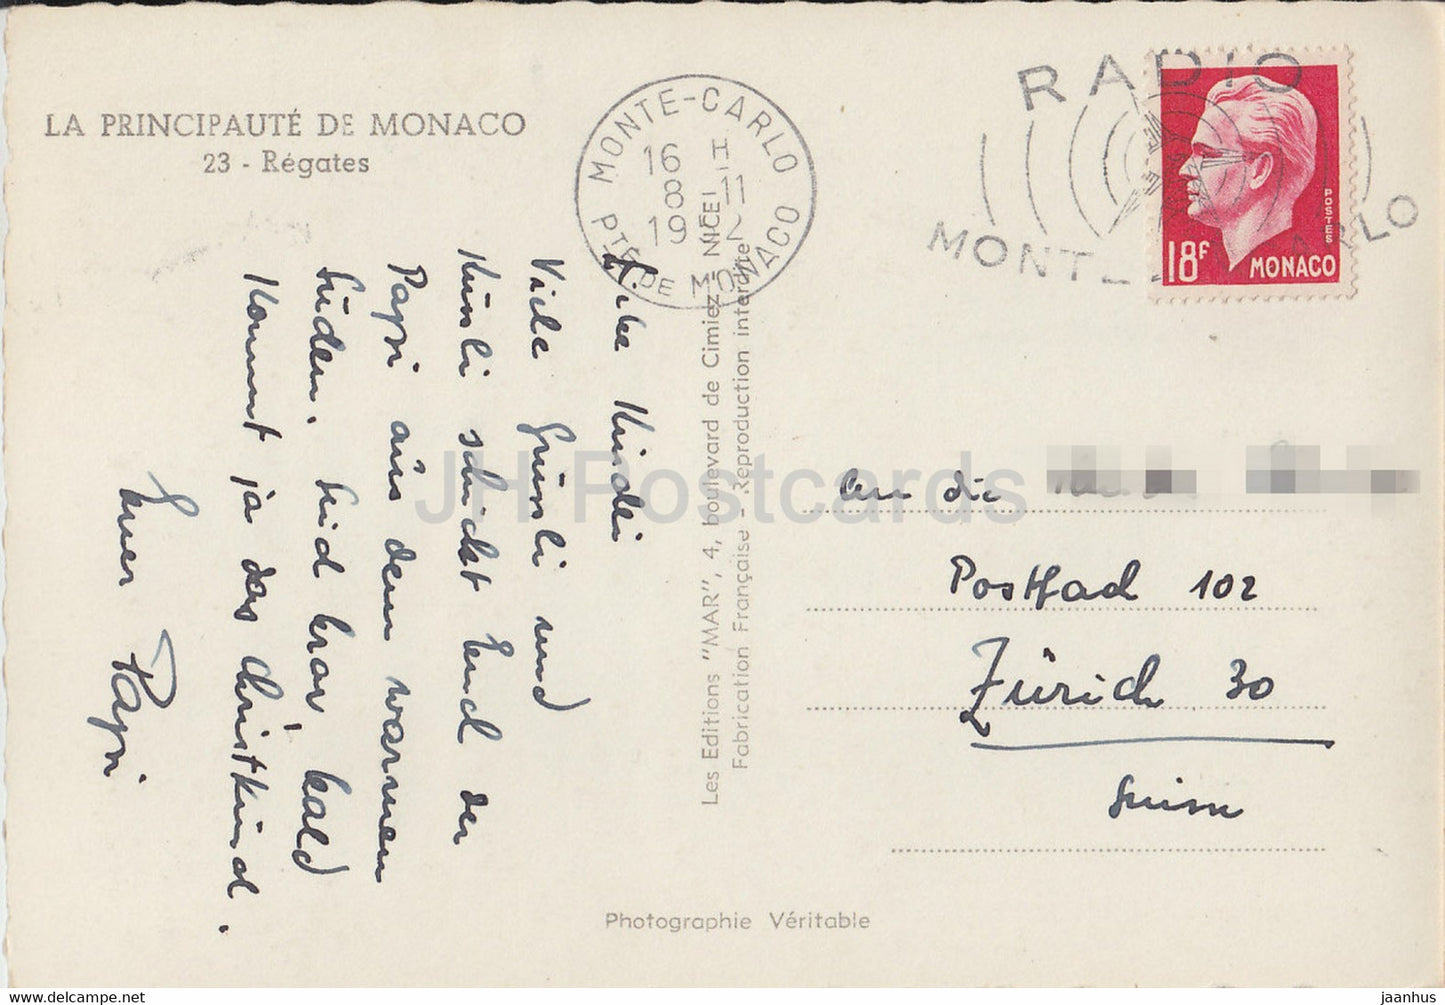 Regates - Regatta - Segelboot - alte Postkarte - 1952 - Monaco - gebraucht